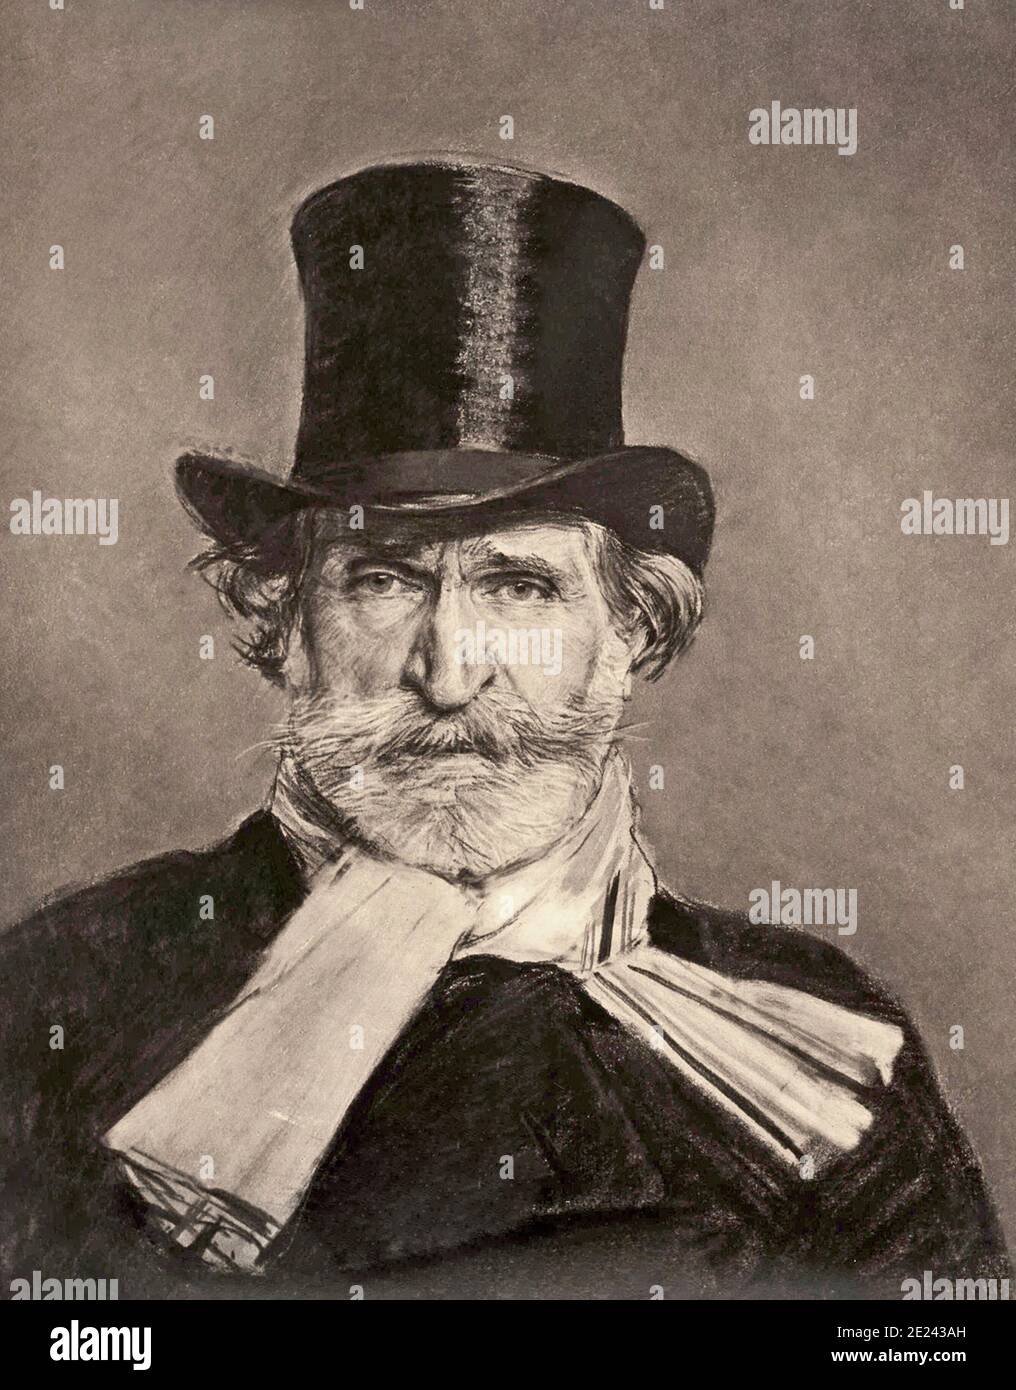 Giuseppe Fortunino Francesco Verdi (1813 – 1901) was an Italian opera composer. Stock Photo